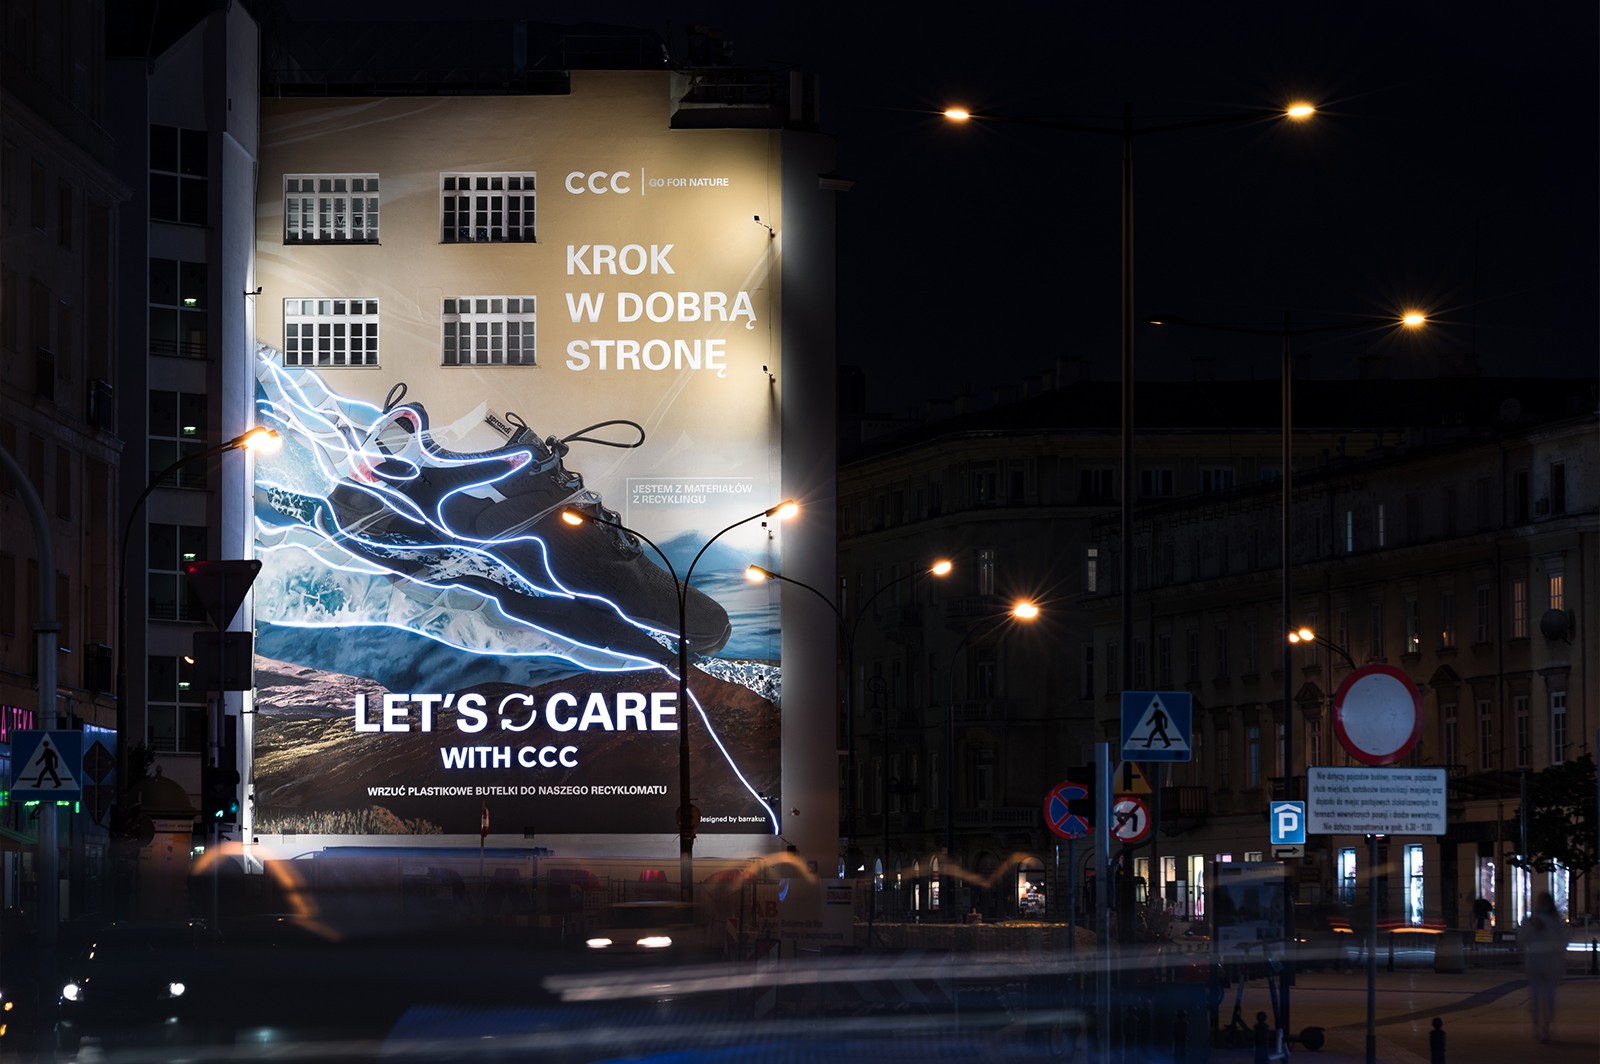 Eko mural reklamowy dla CCC | LET'S CARE | Portfolio